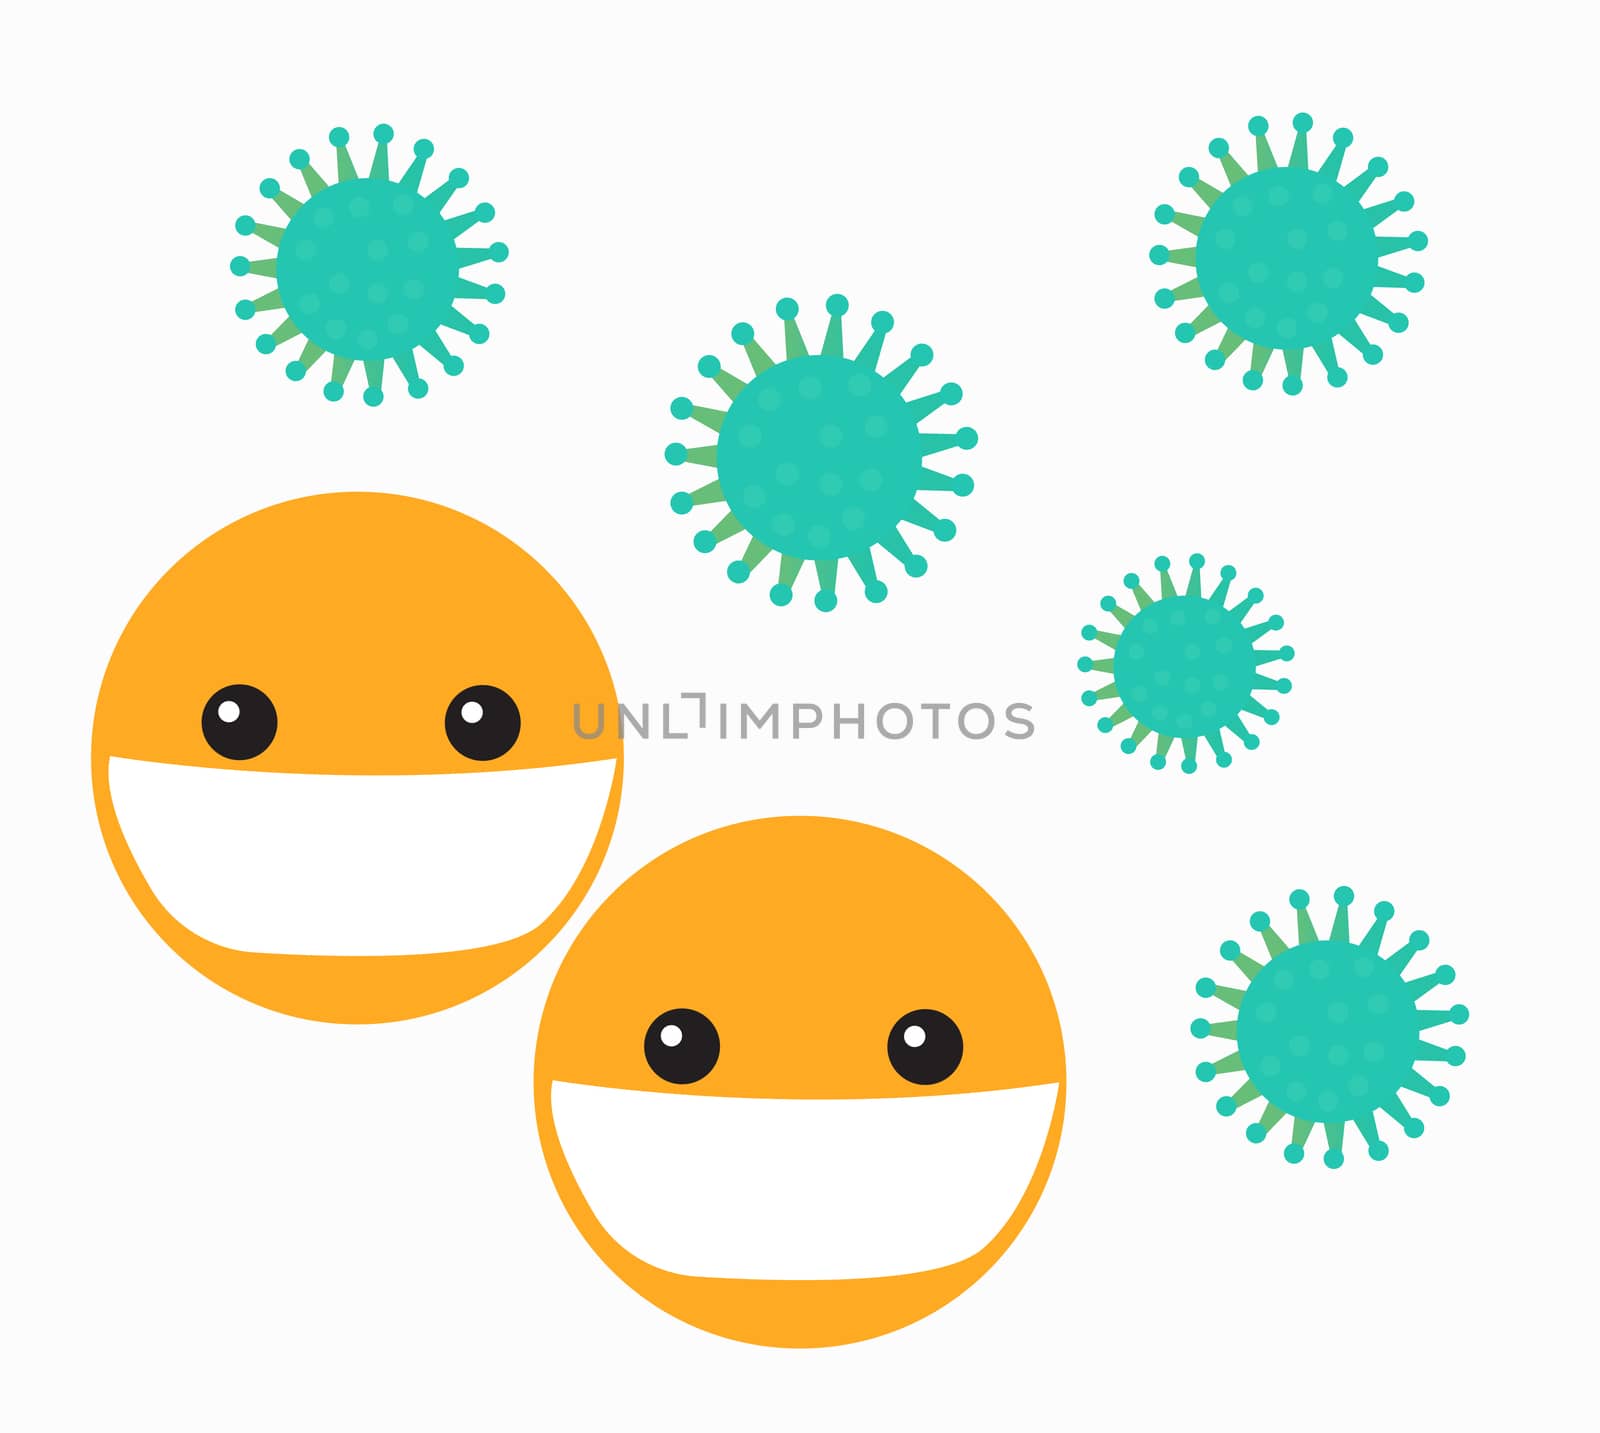 Coronavirus Bacteria Icon Flat Style, 2019-nCoV Novel Coronavirus Bacteria. No Infection Concepts. Dangerous pneumonia pandemic disease. by lucia_fox